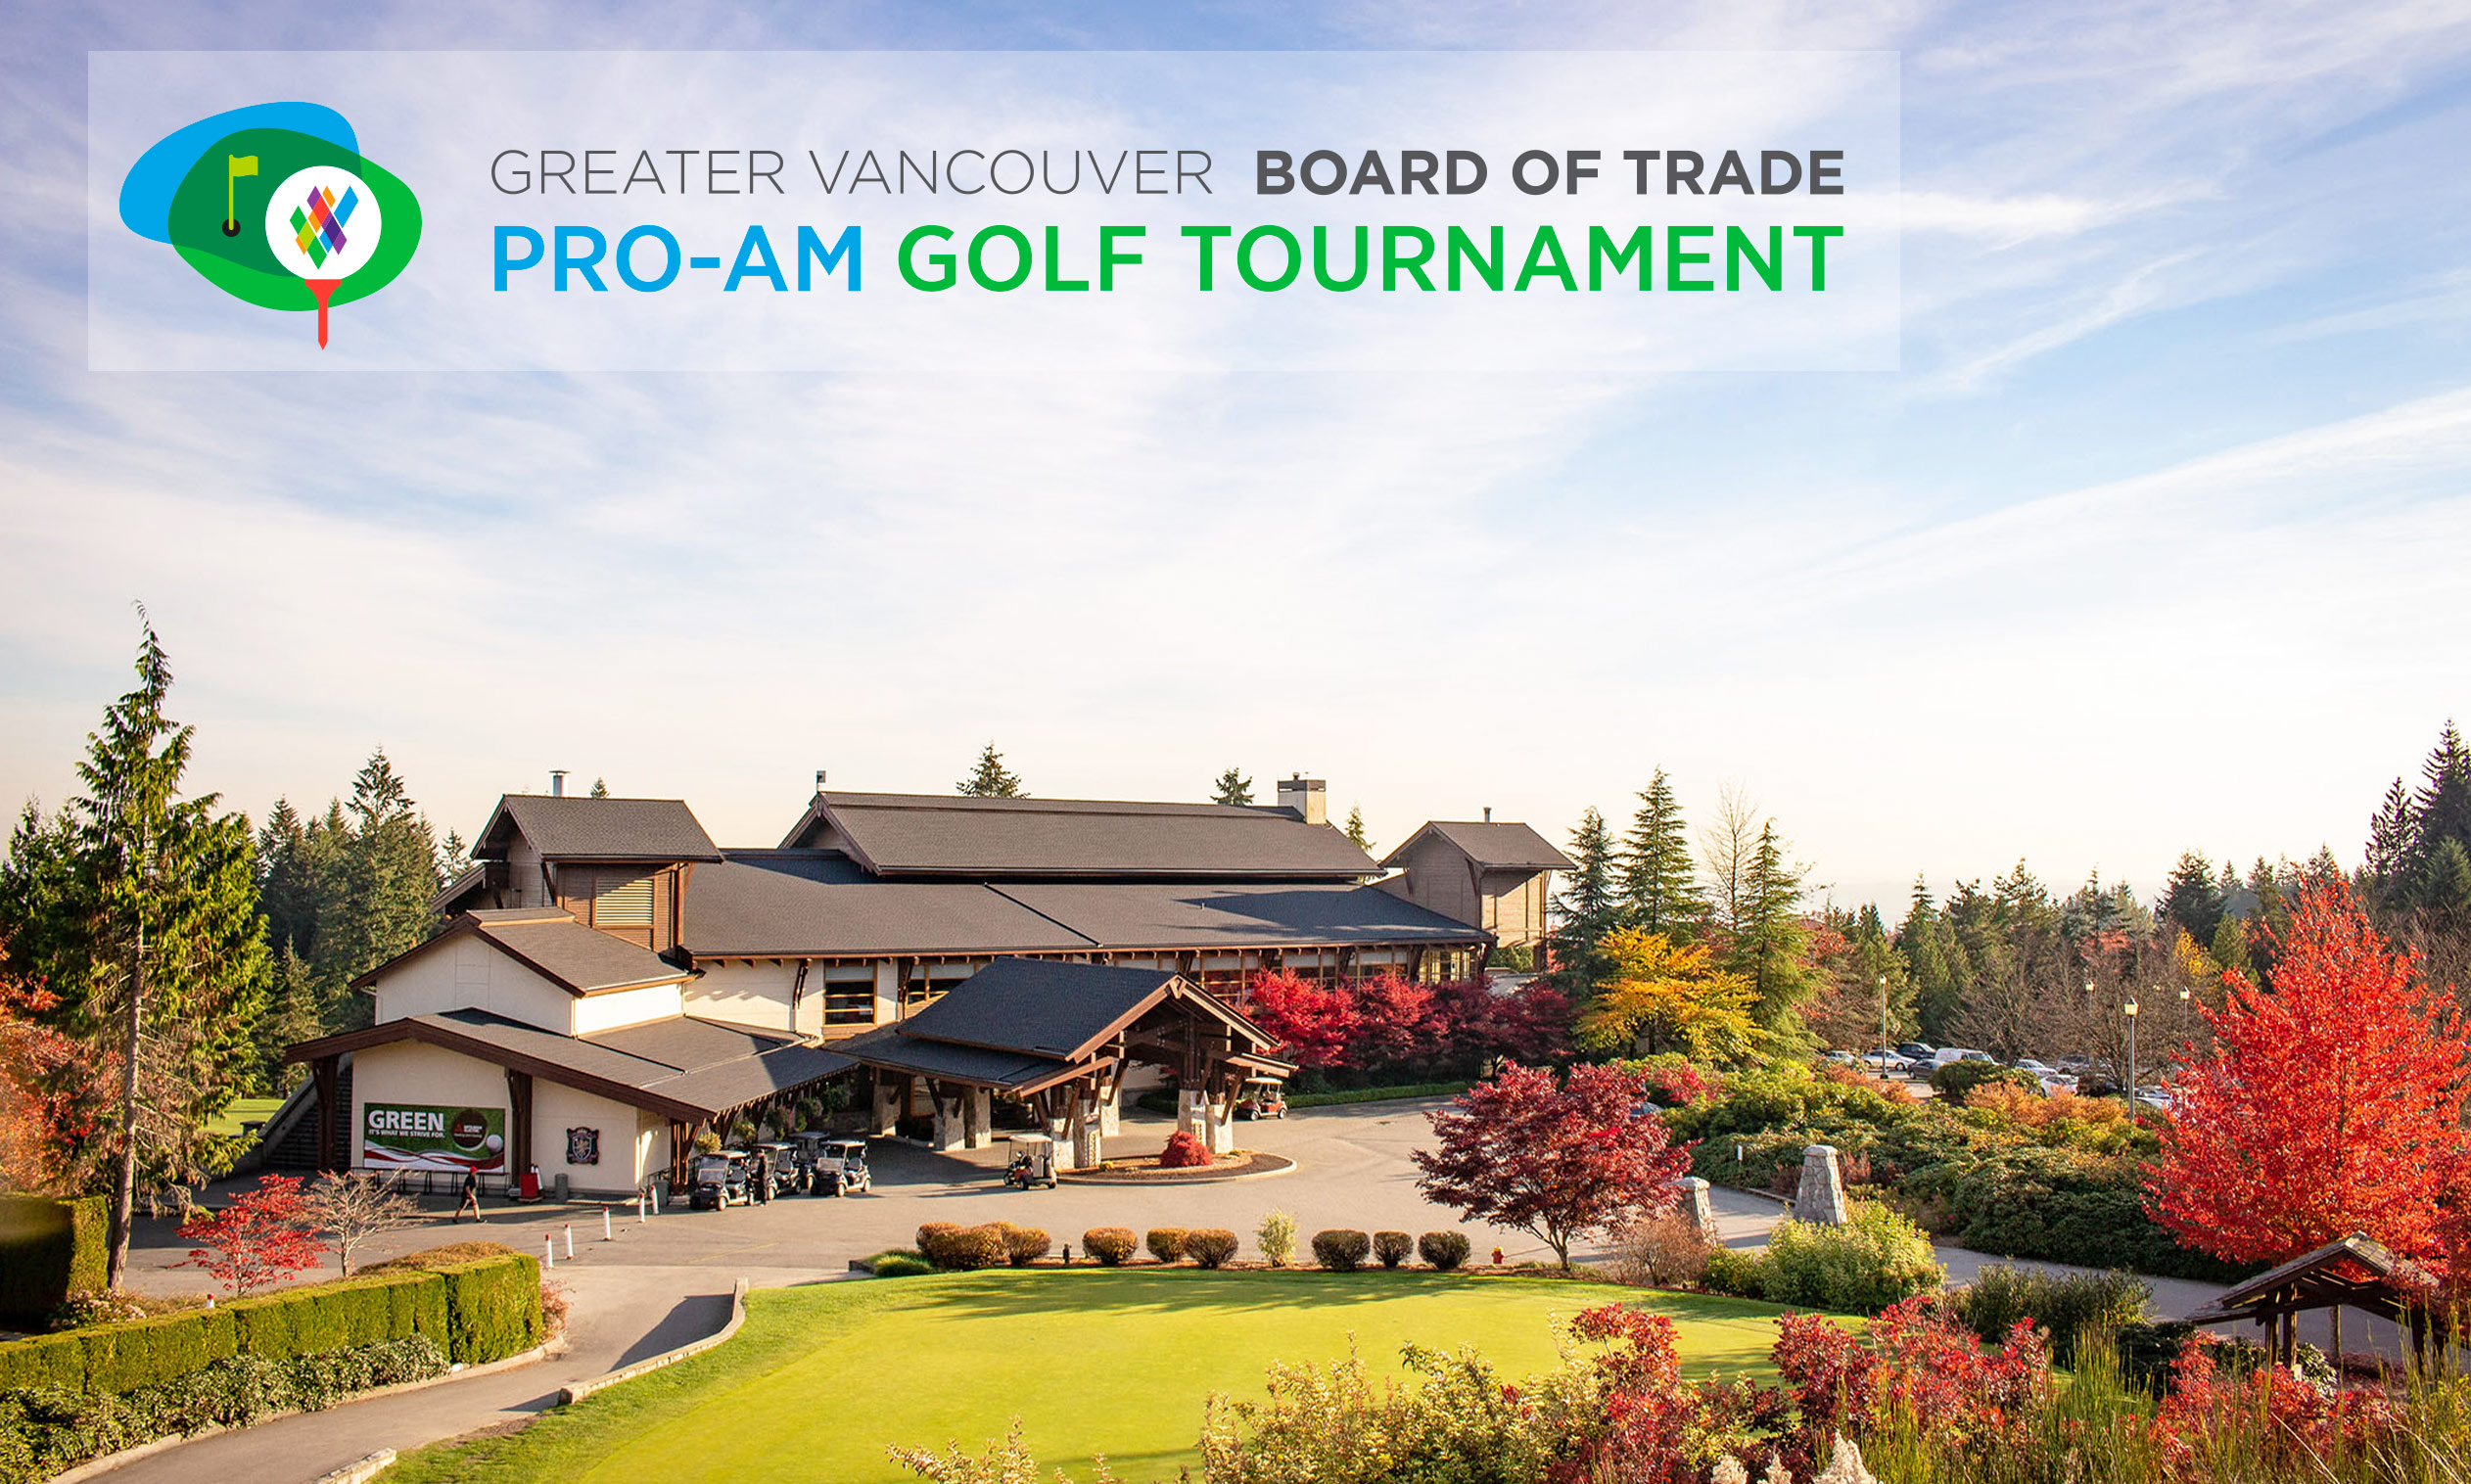 GVBOT Pro-Am Golf Tournament 2021